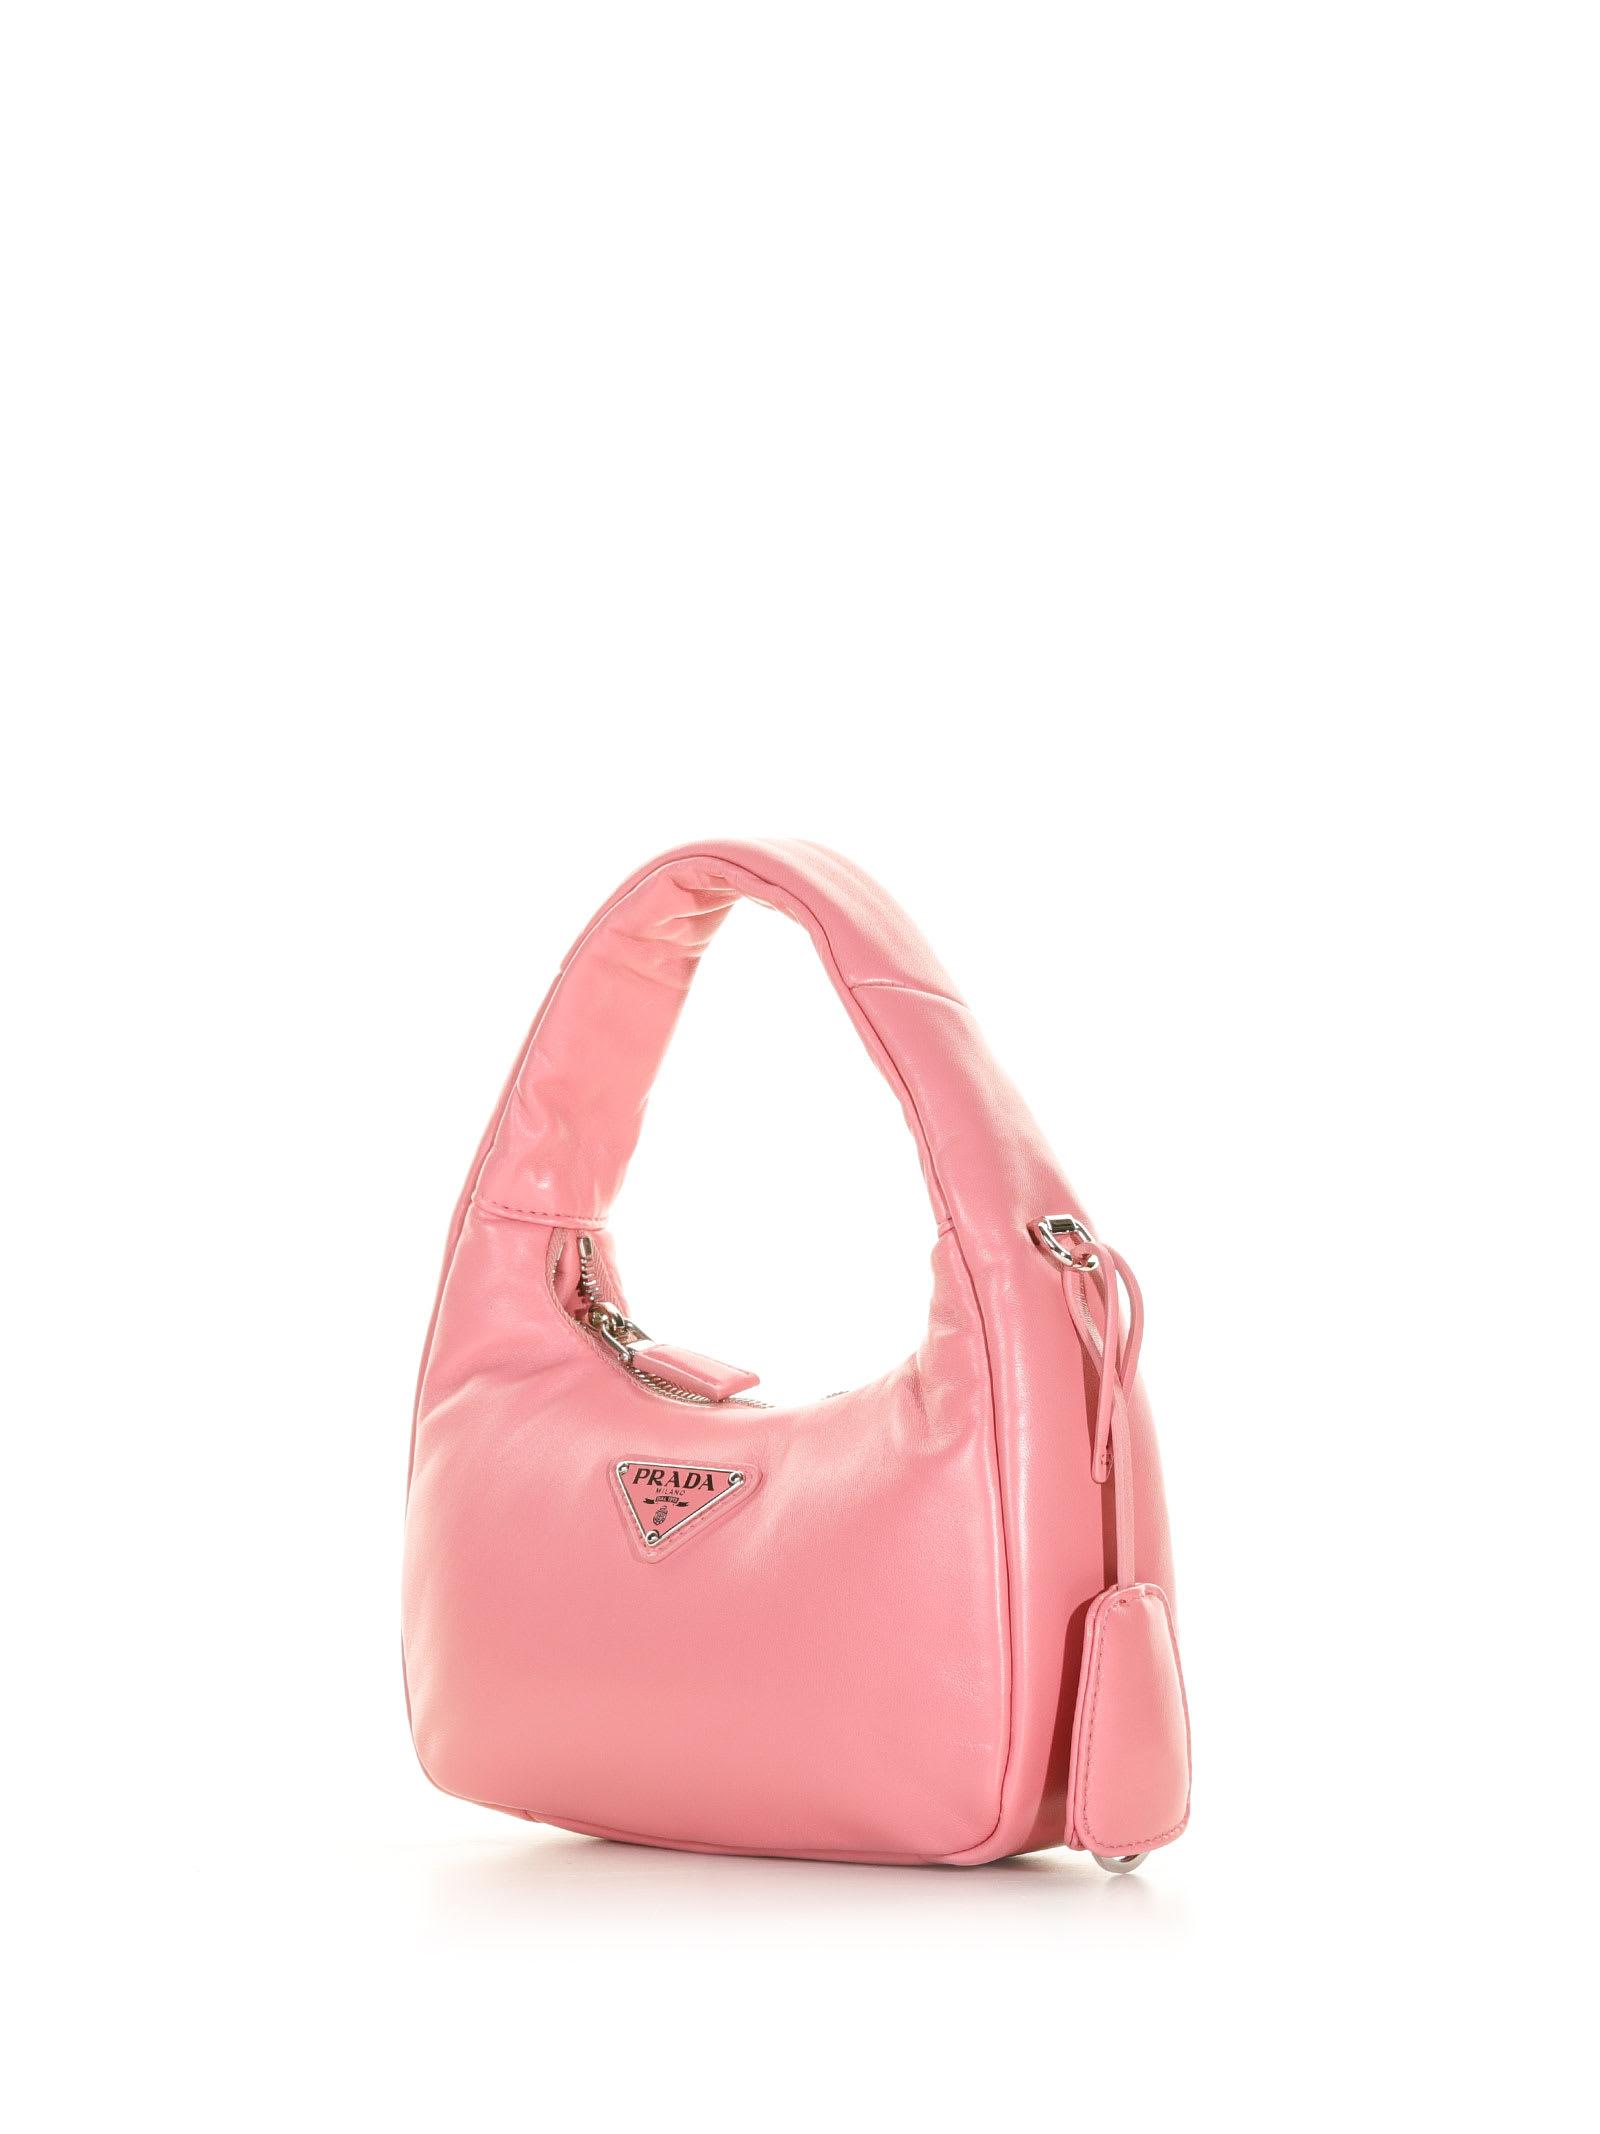 Prada Soft Mini Bag In Padded Nappa Leather in Pink | Lyst